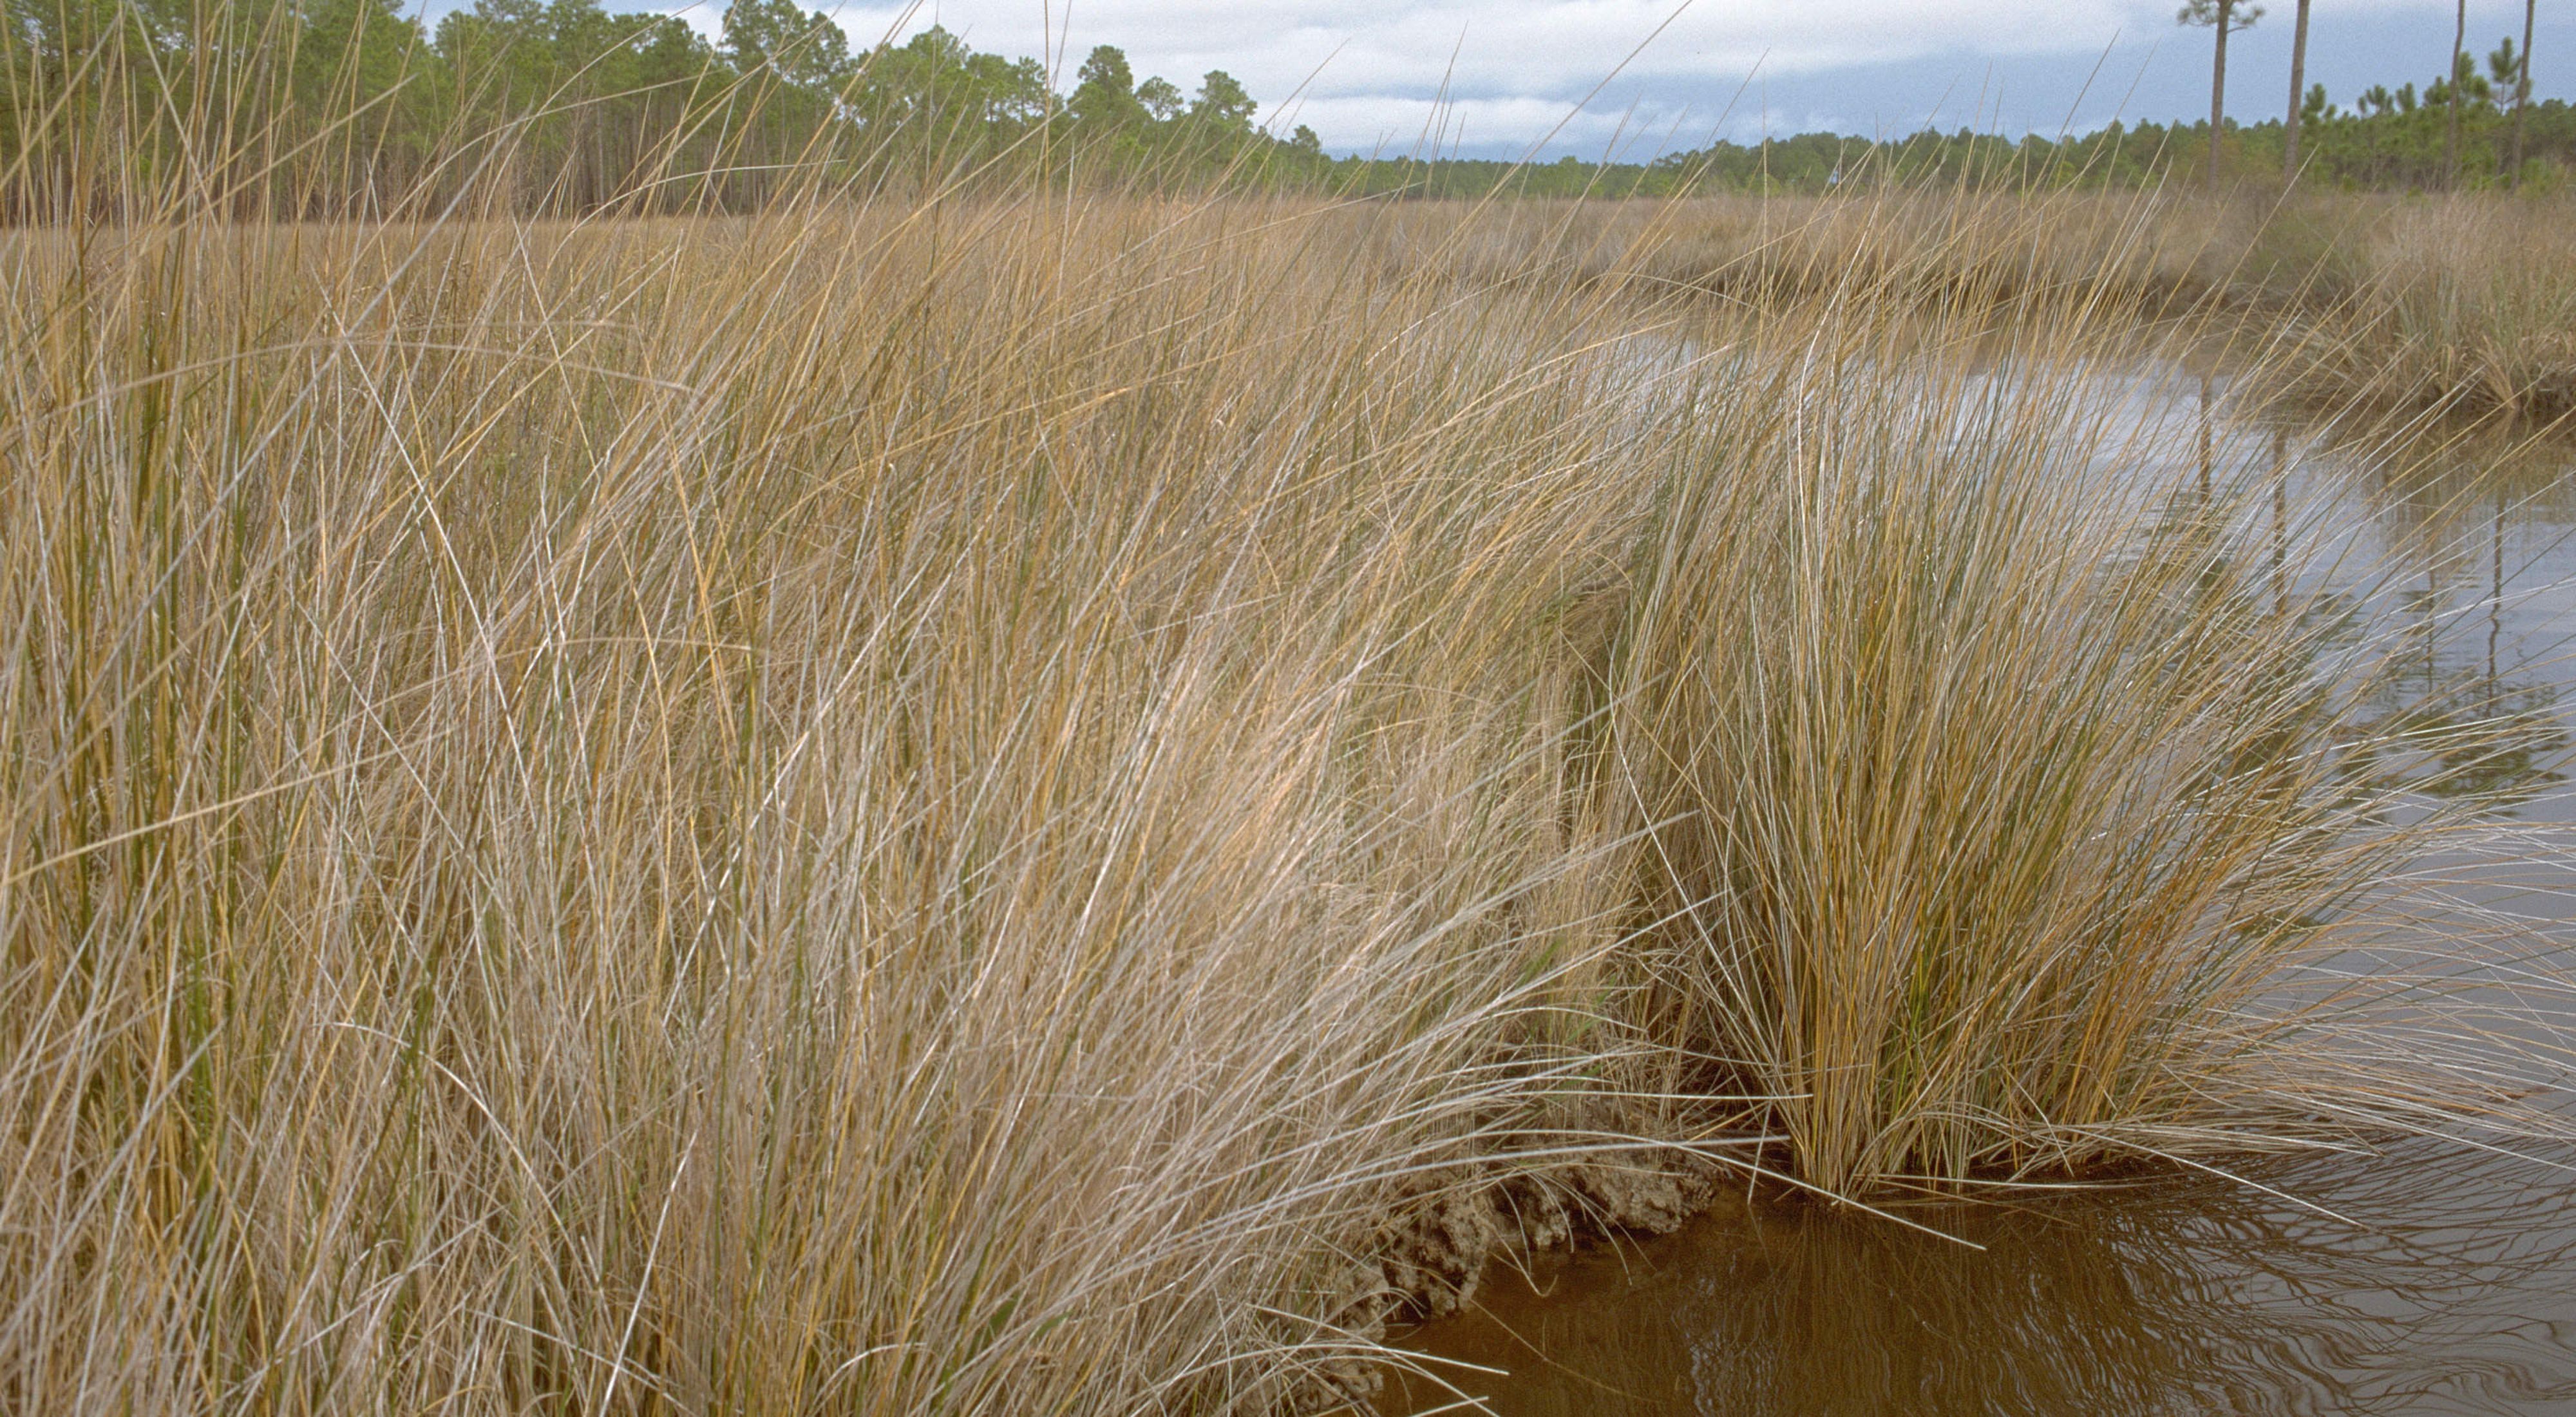 Intertidal marsh at Grand Bay Savanna in Mississippi/Alabama, United States, North America.